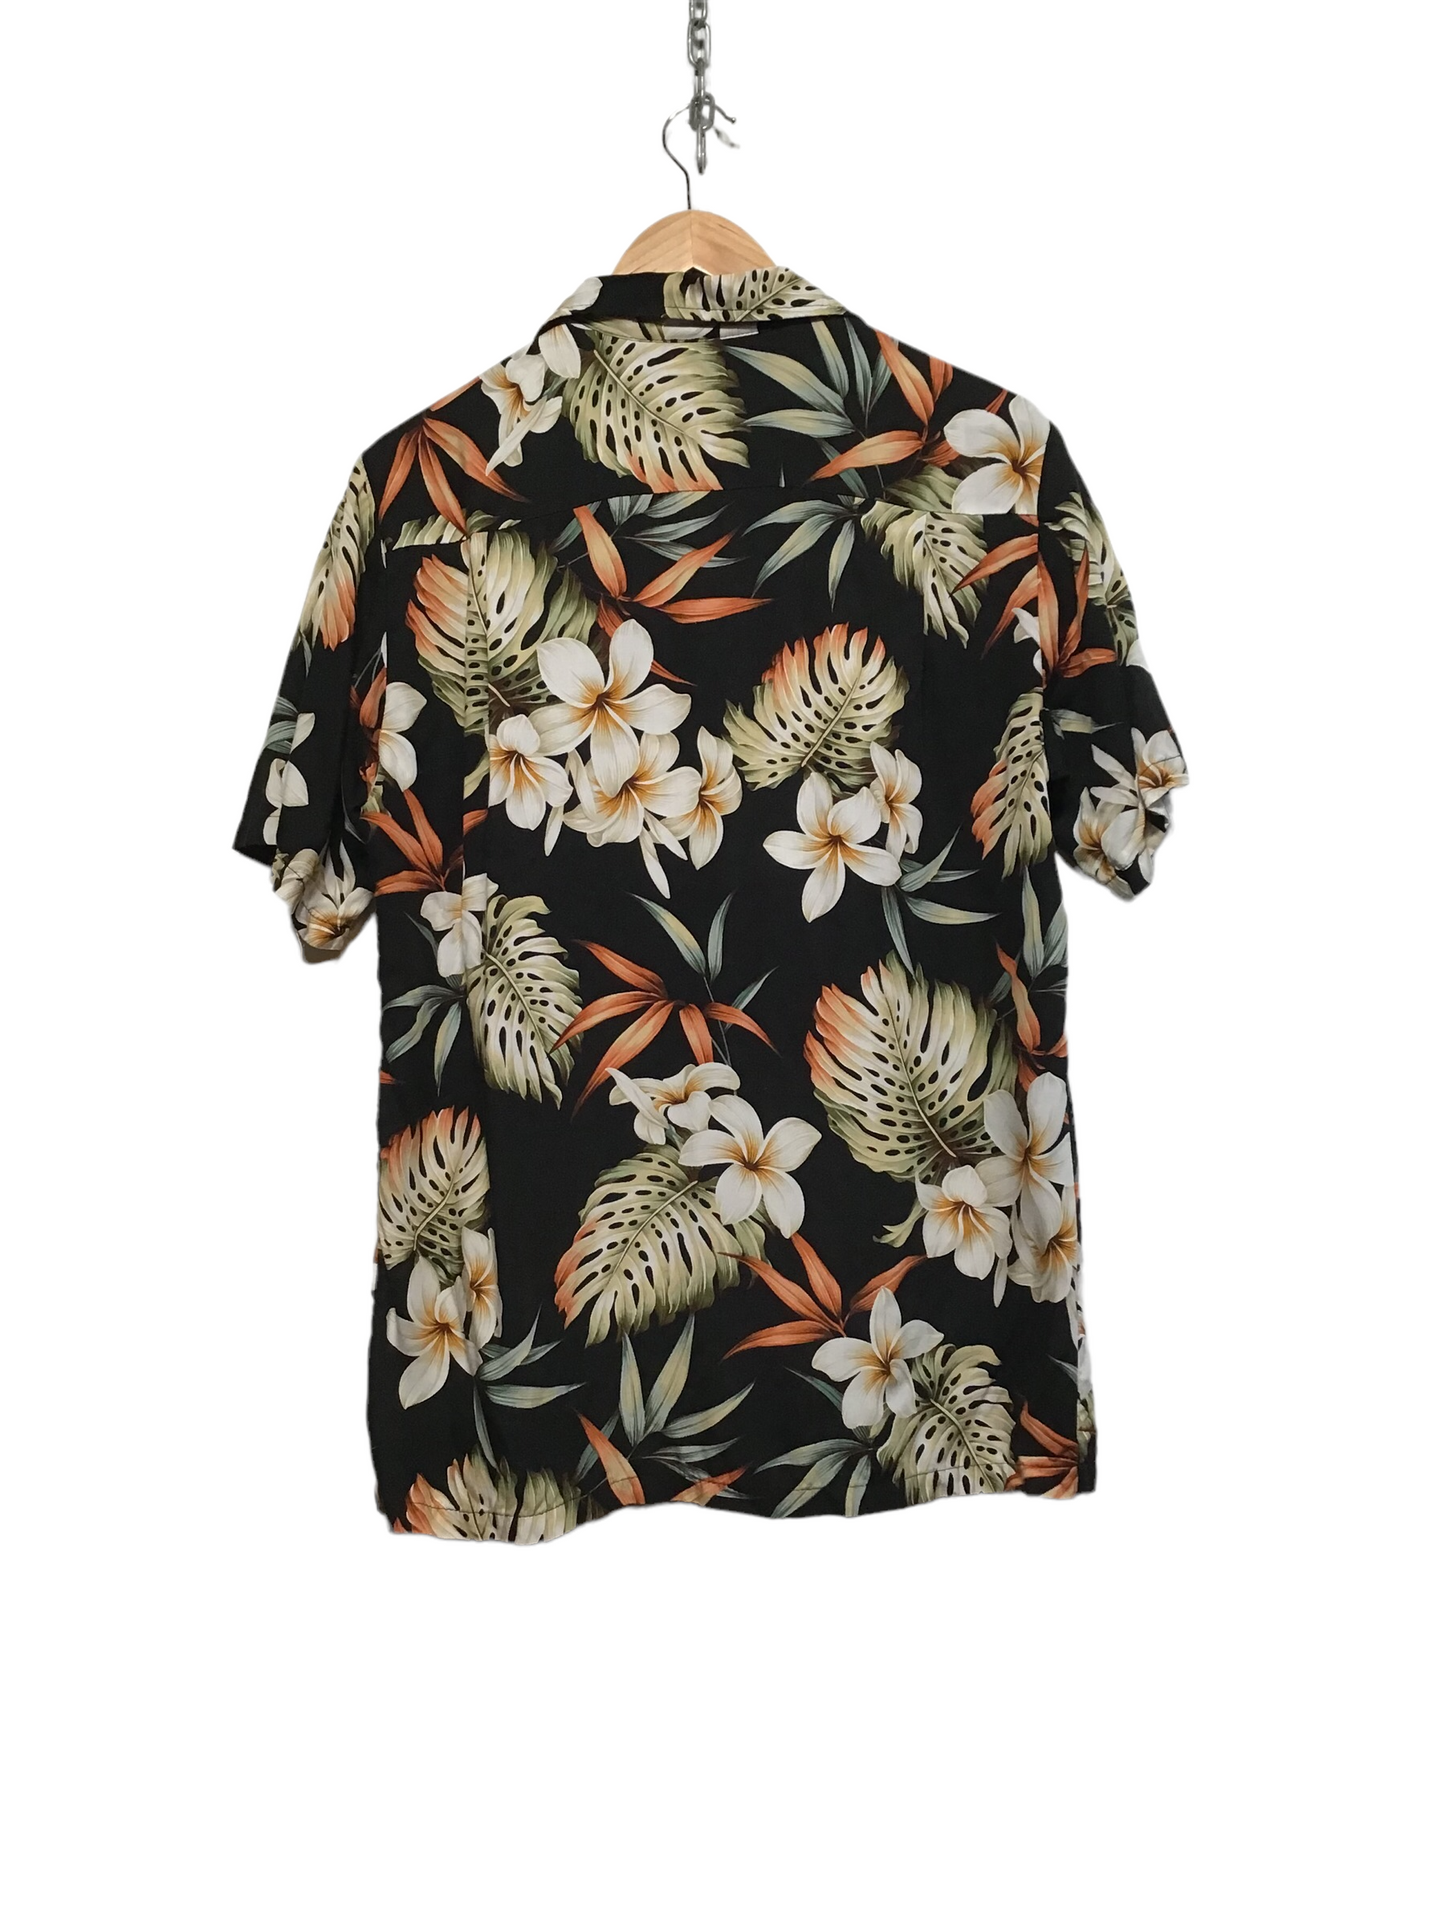 Black Hawaiian Shirt (Size M)